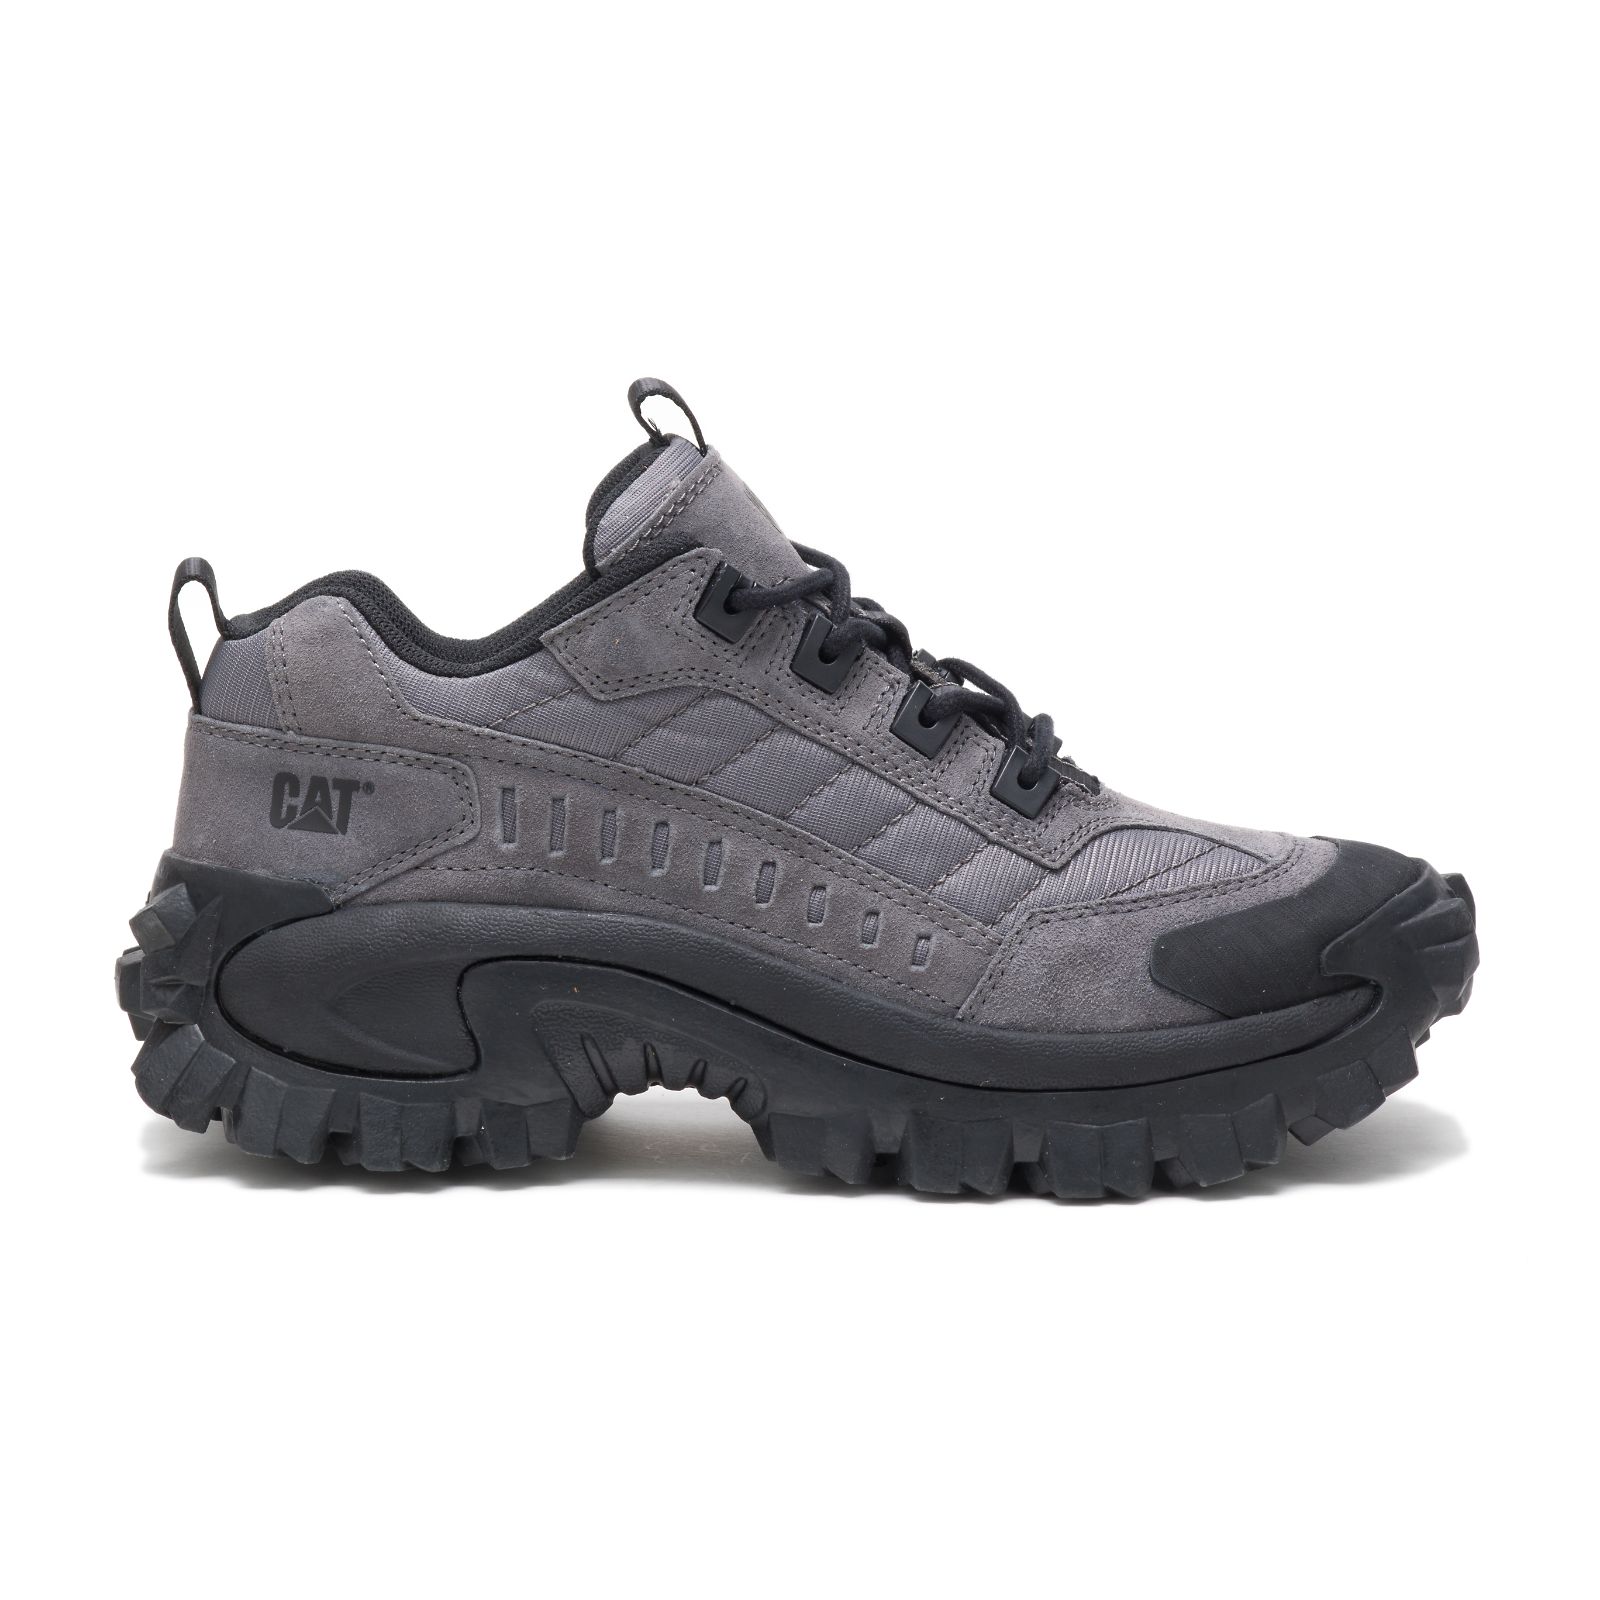 Caterpillar Shoes Karachi - Caterpillar Intruder Mens Sneakers deep grey/Black (605874-USR)